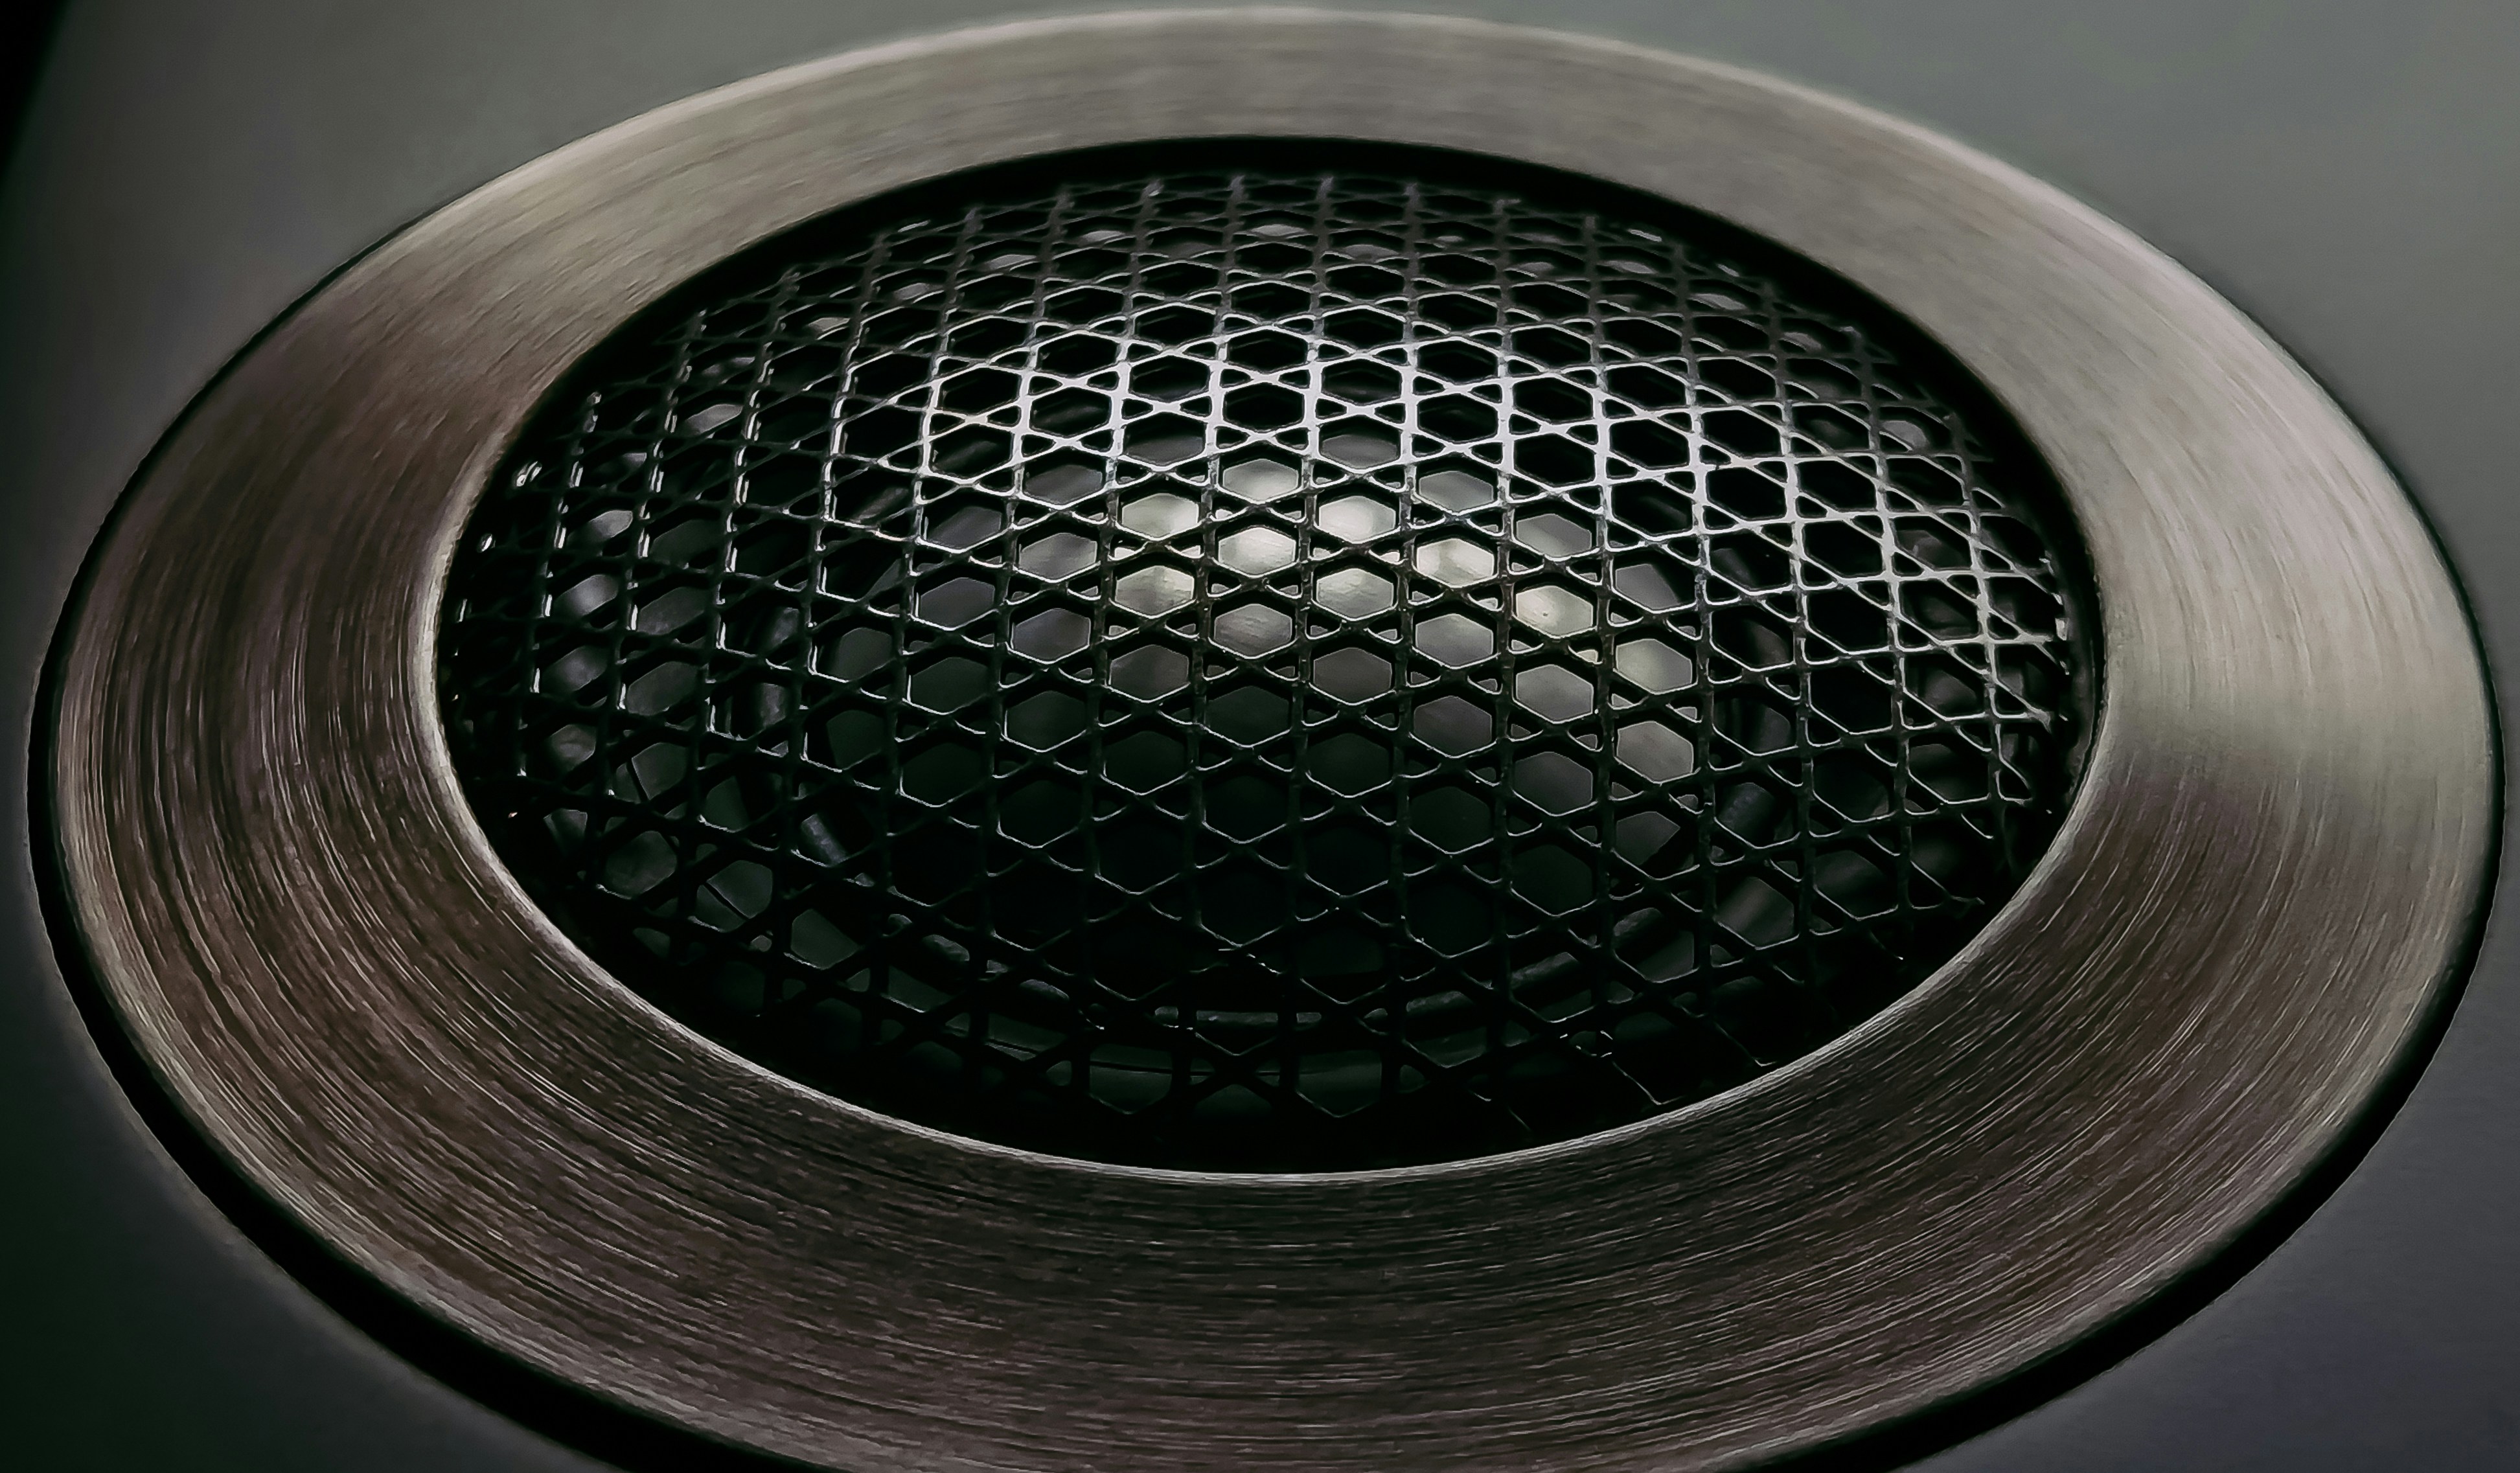 close-up shot of a speaker driver